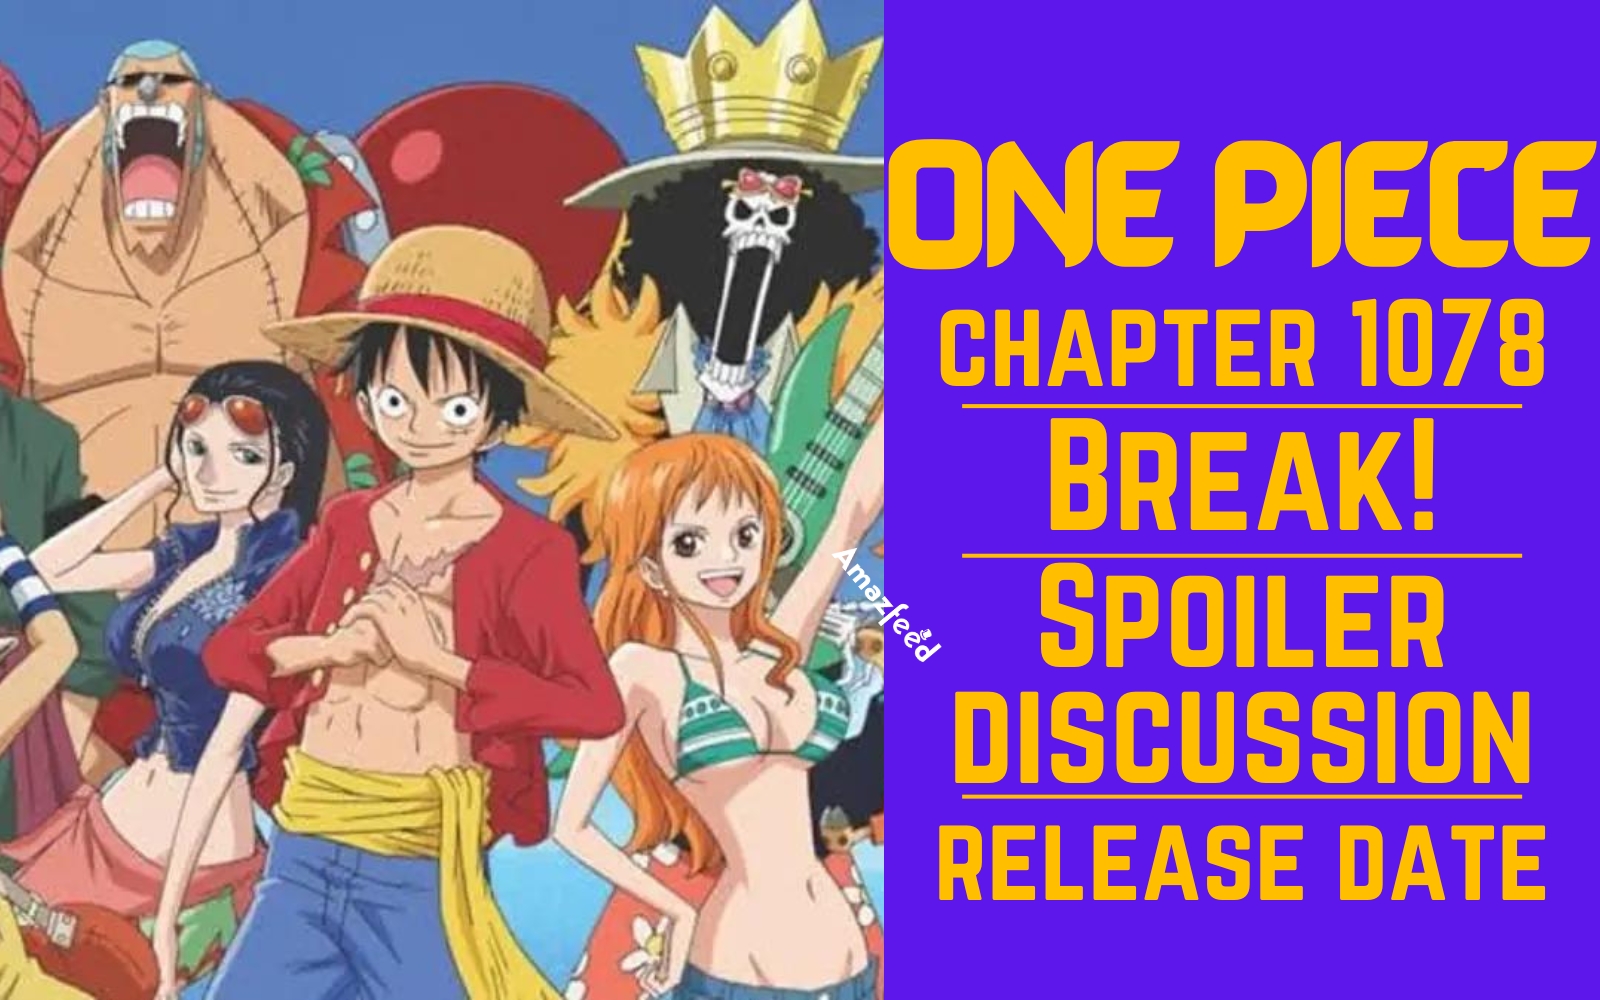 One Piece Episode 1078 🔥 Follow me @porrtgas for more peak content 🗣️